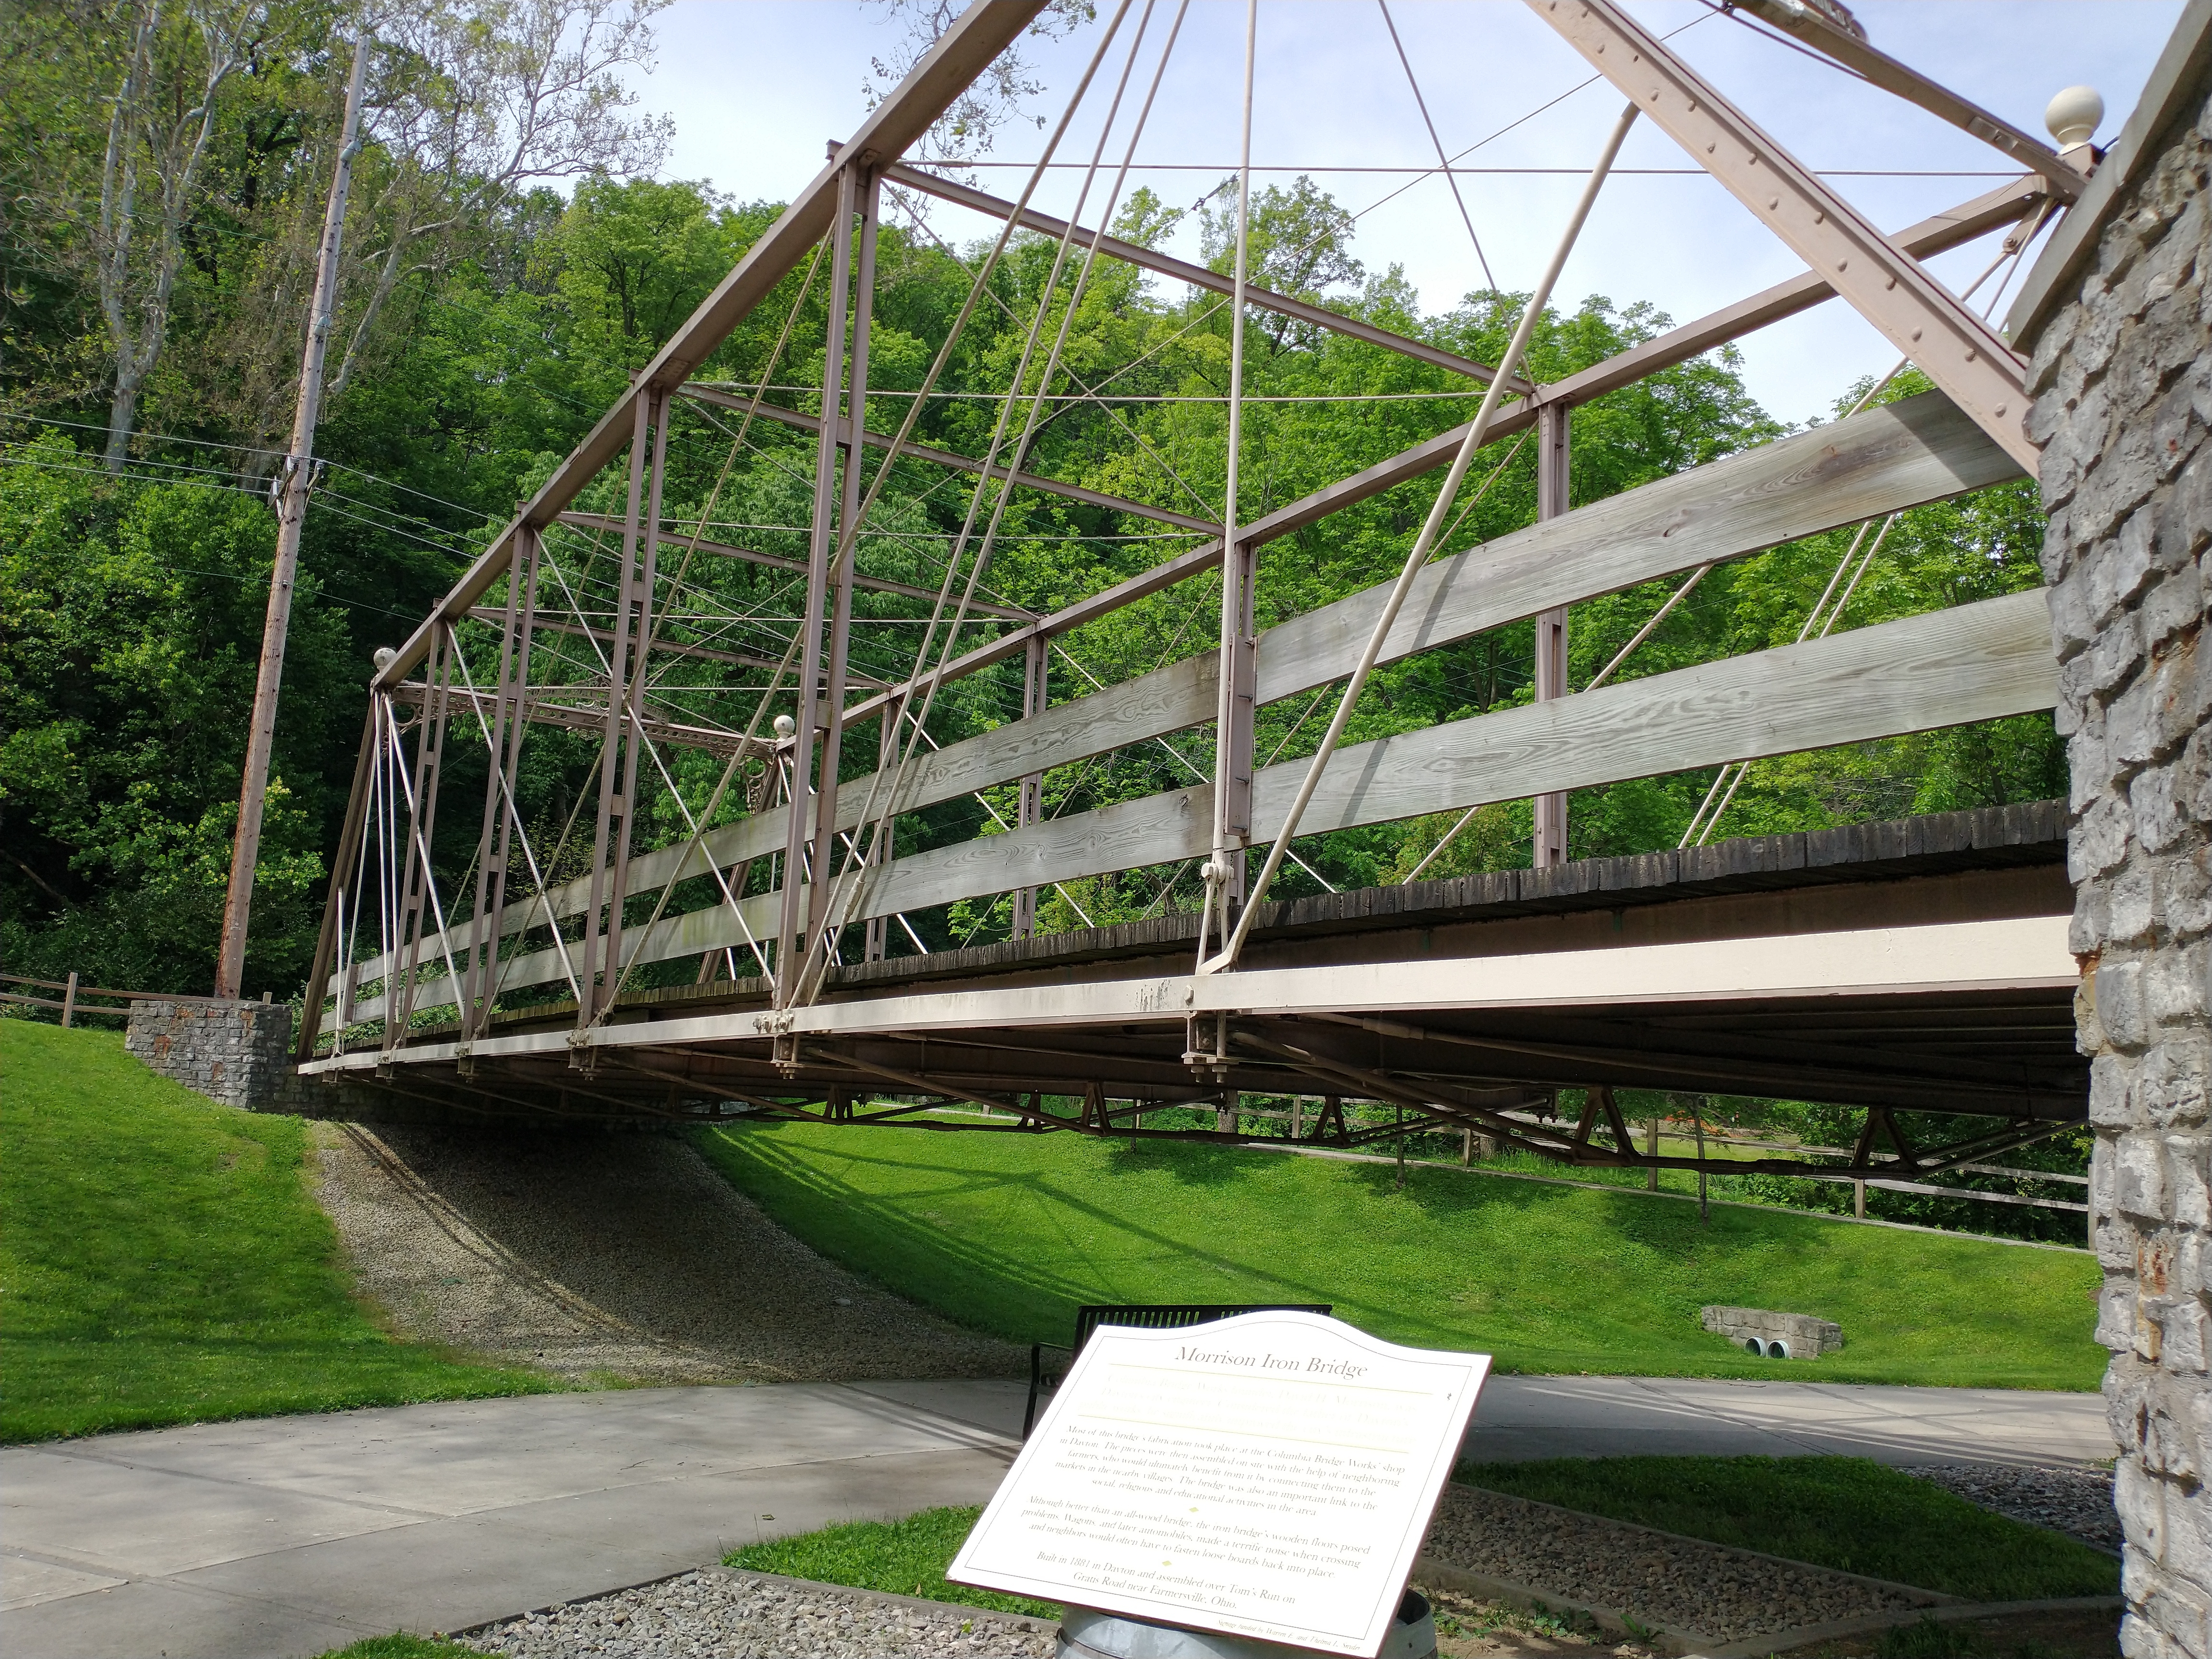 Morrison Iron Bridge Marker